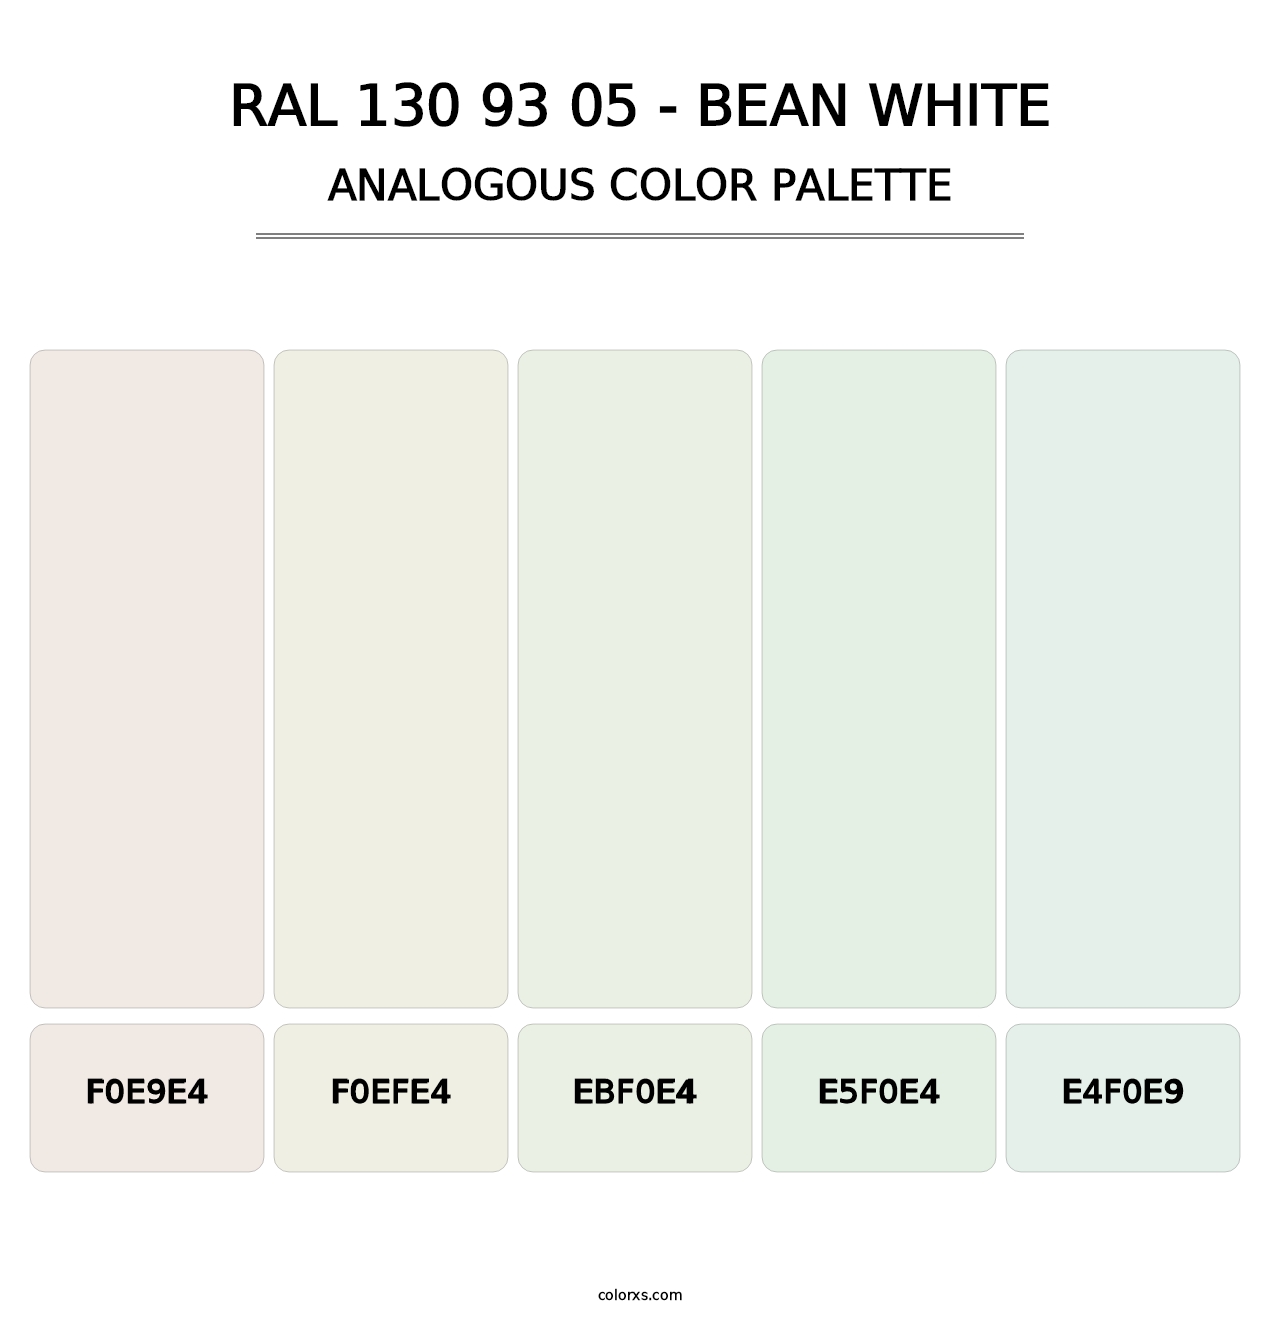 RAL 130 93 05 - Bean White - Analogous Color Palette